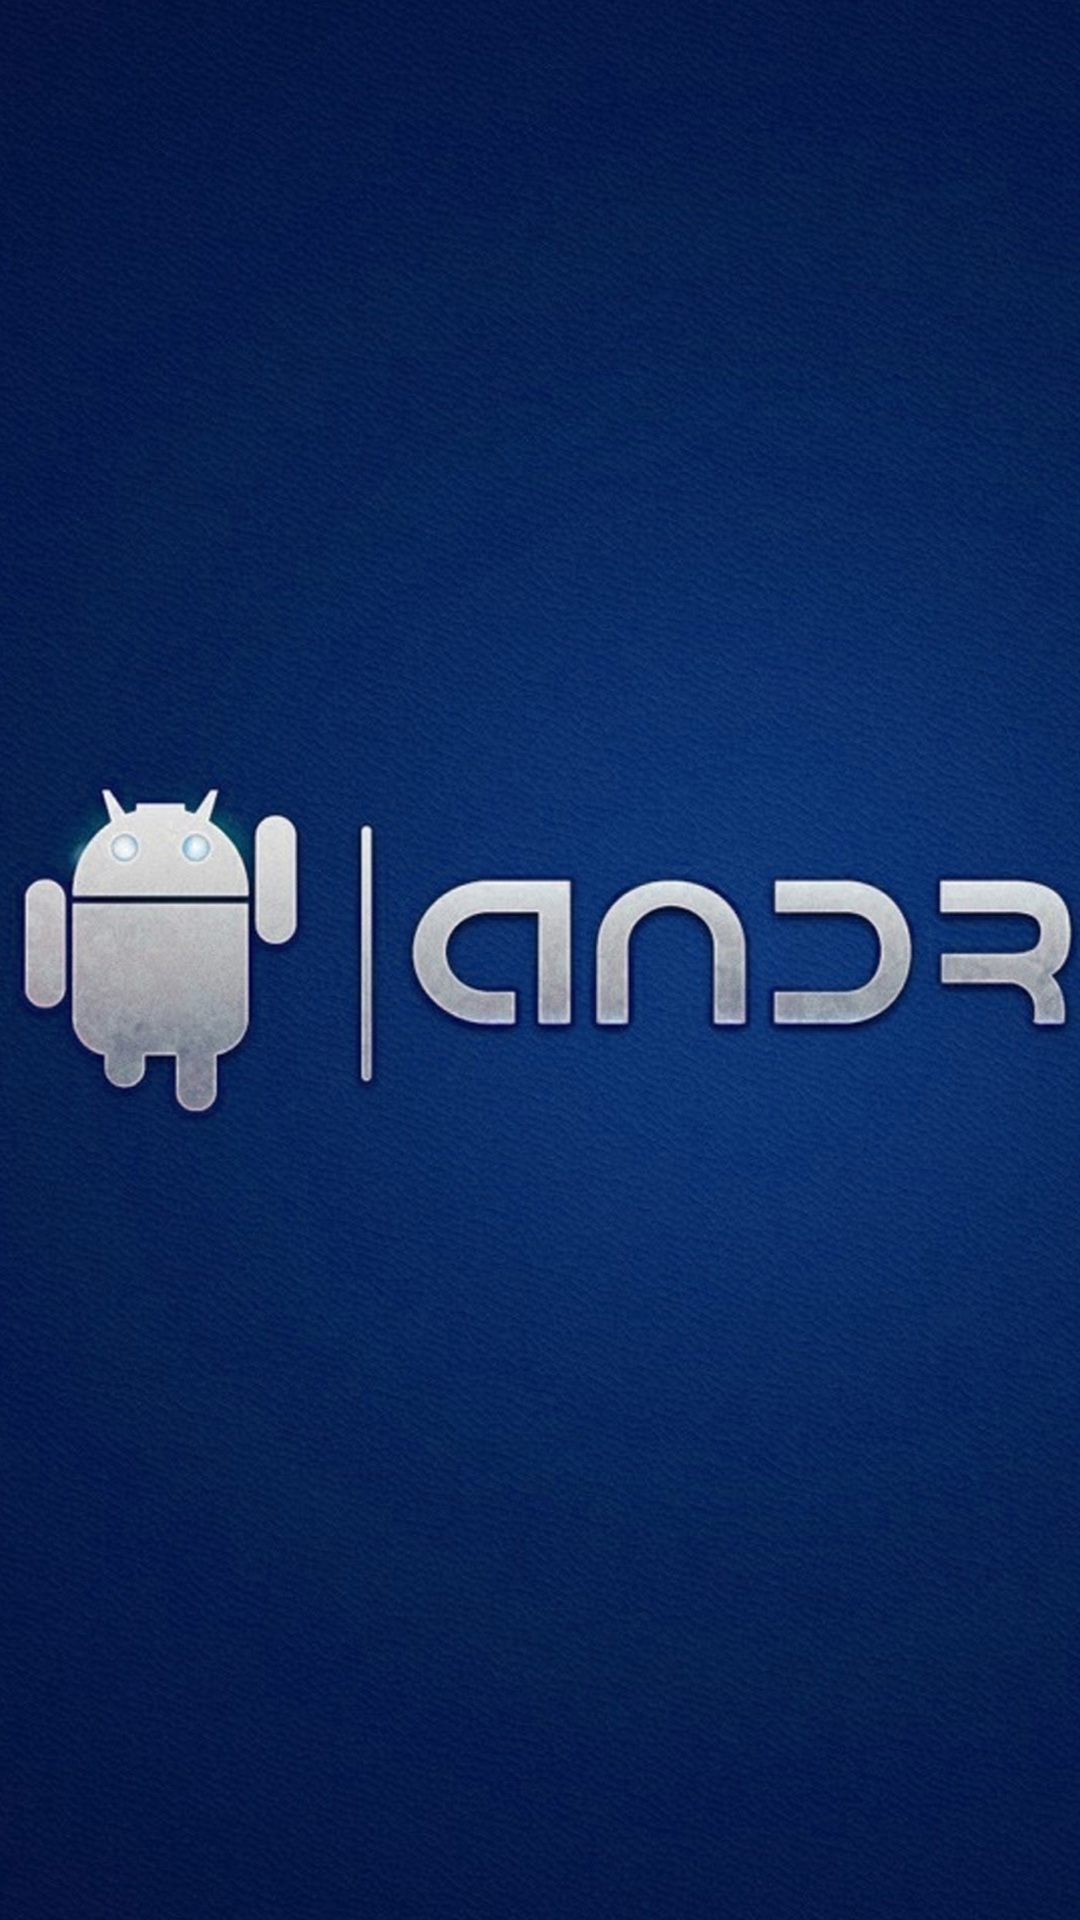 Home Android Logo Samsung Wallpaper